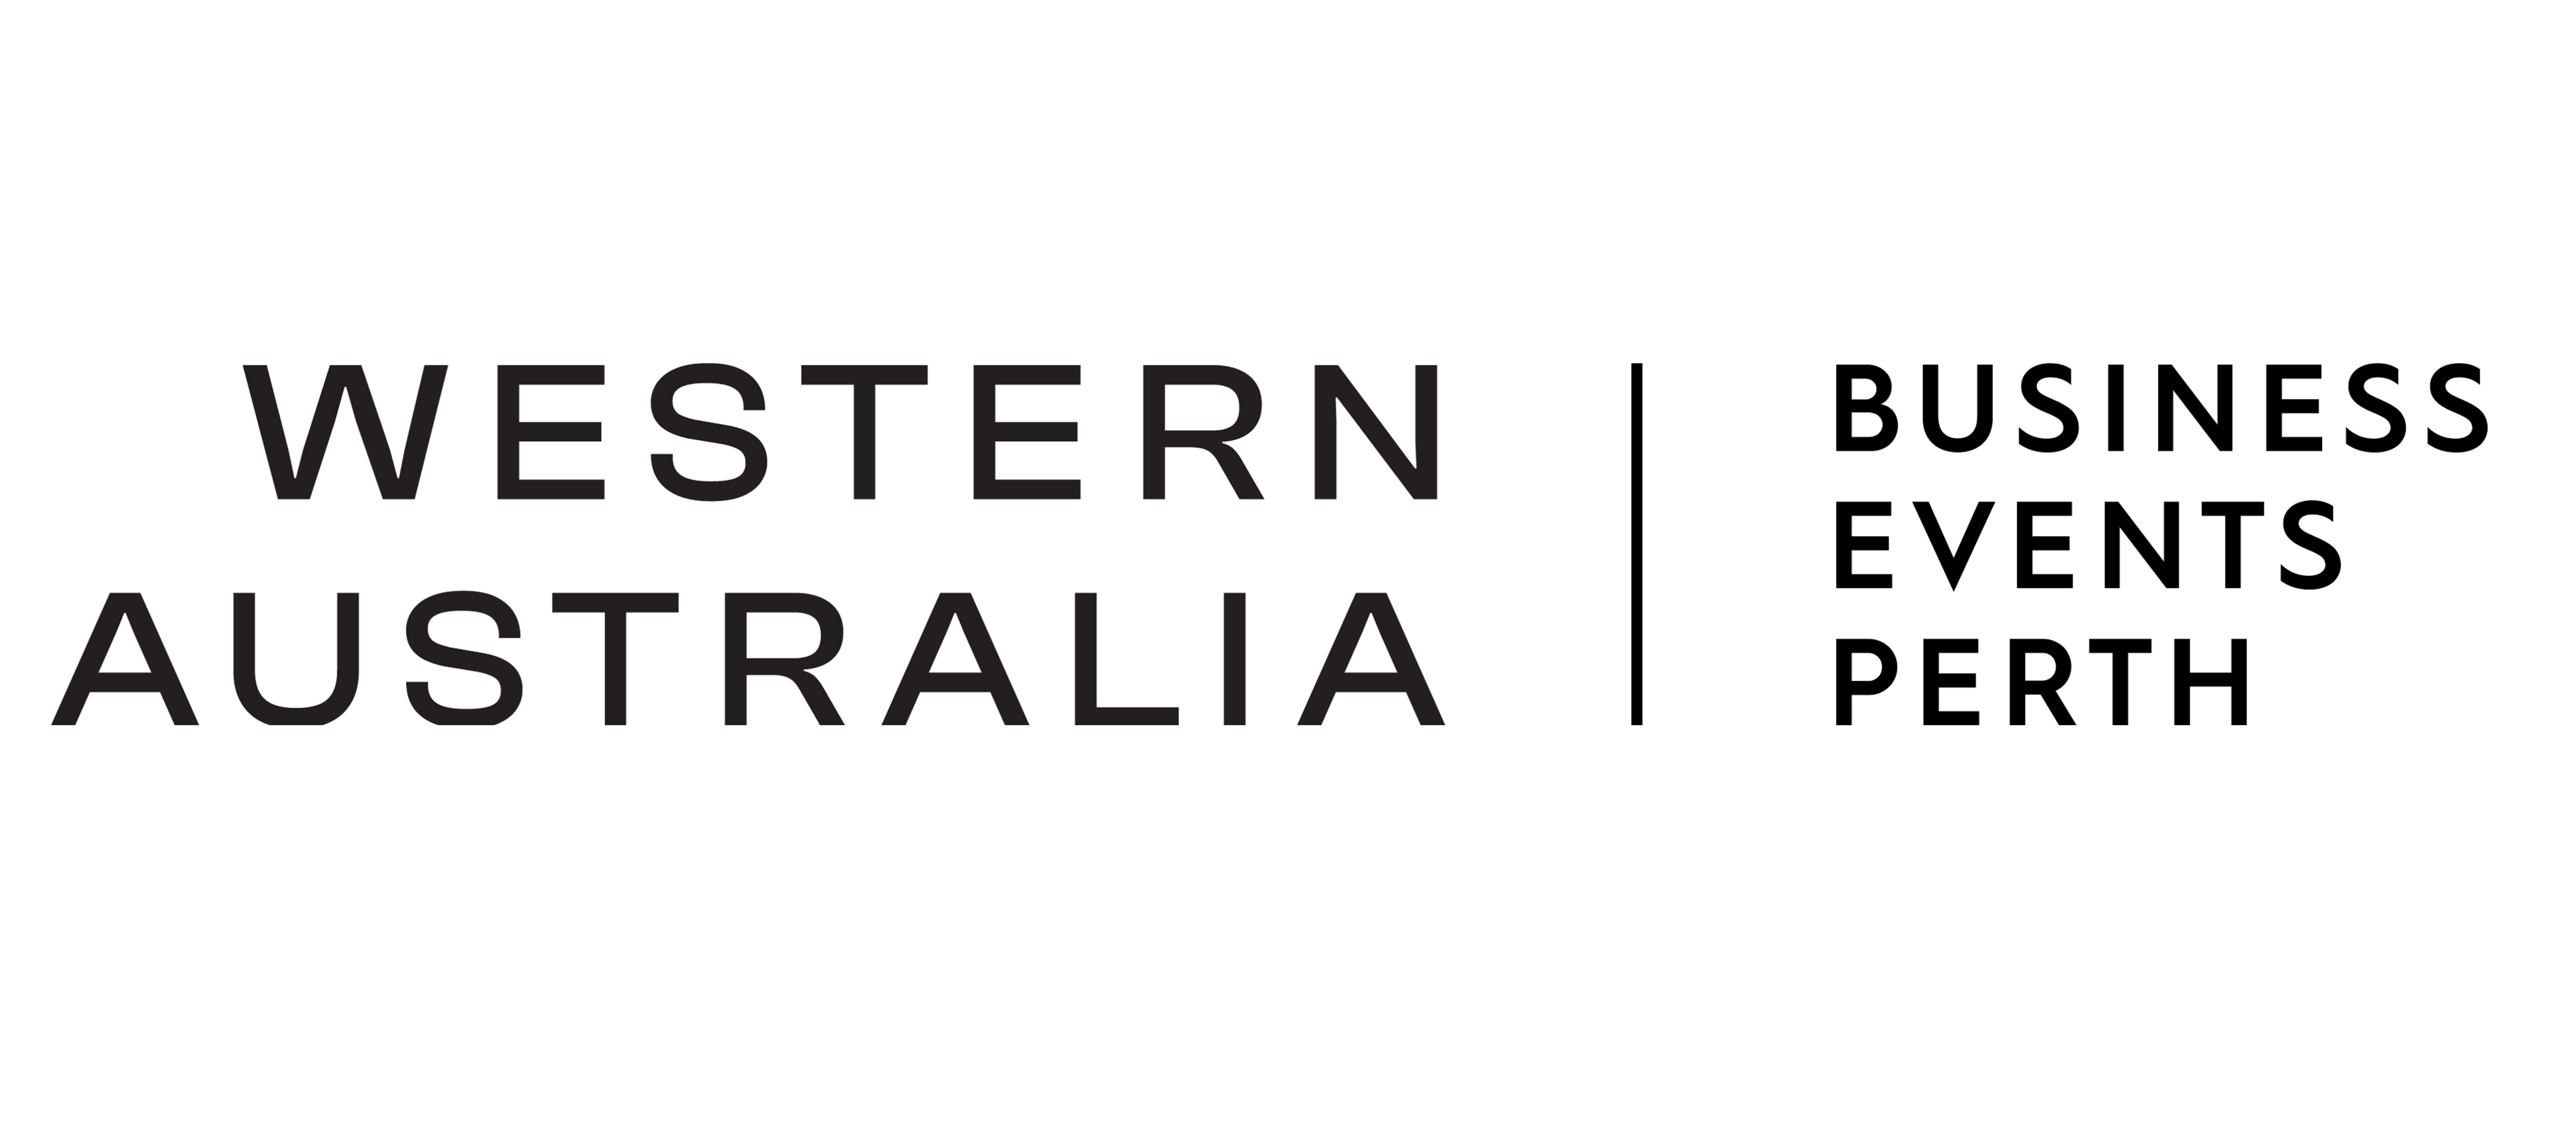 Western Australia Business Events Perth